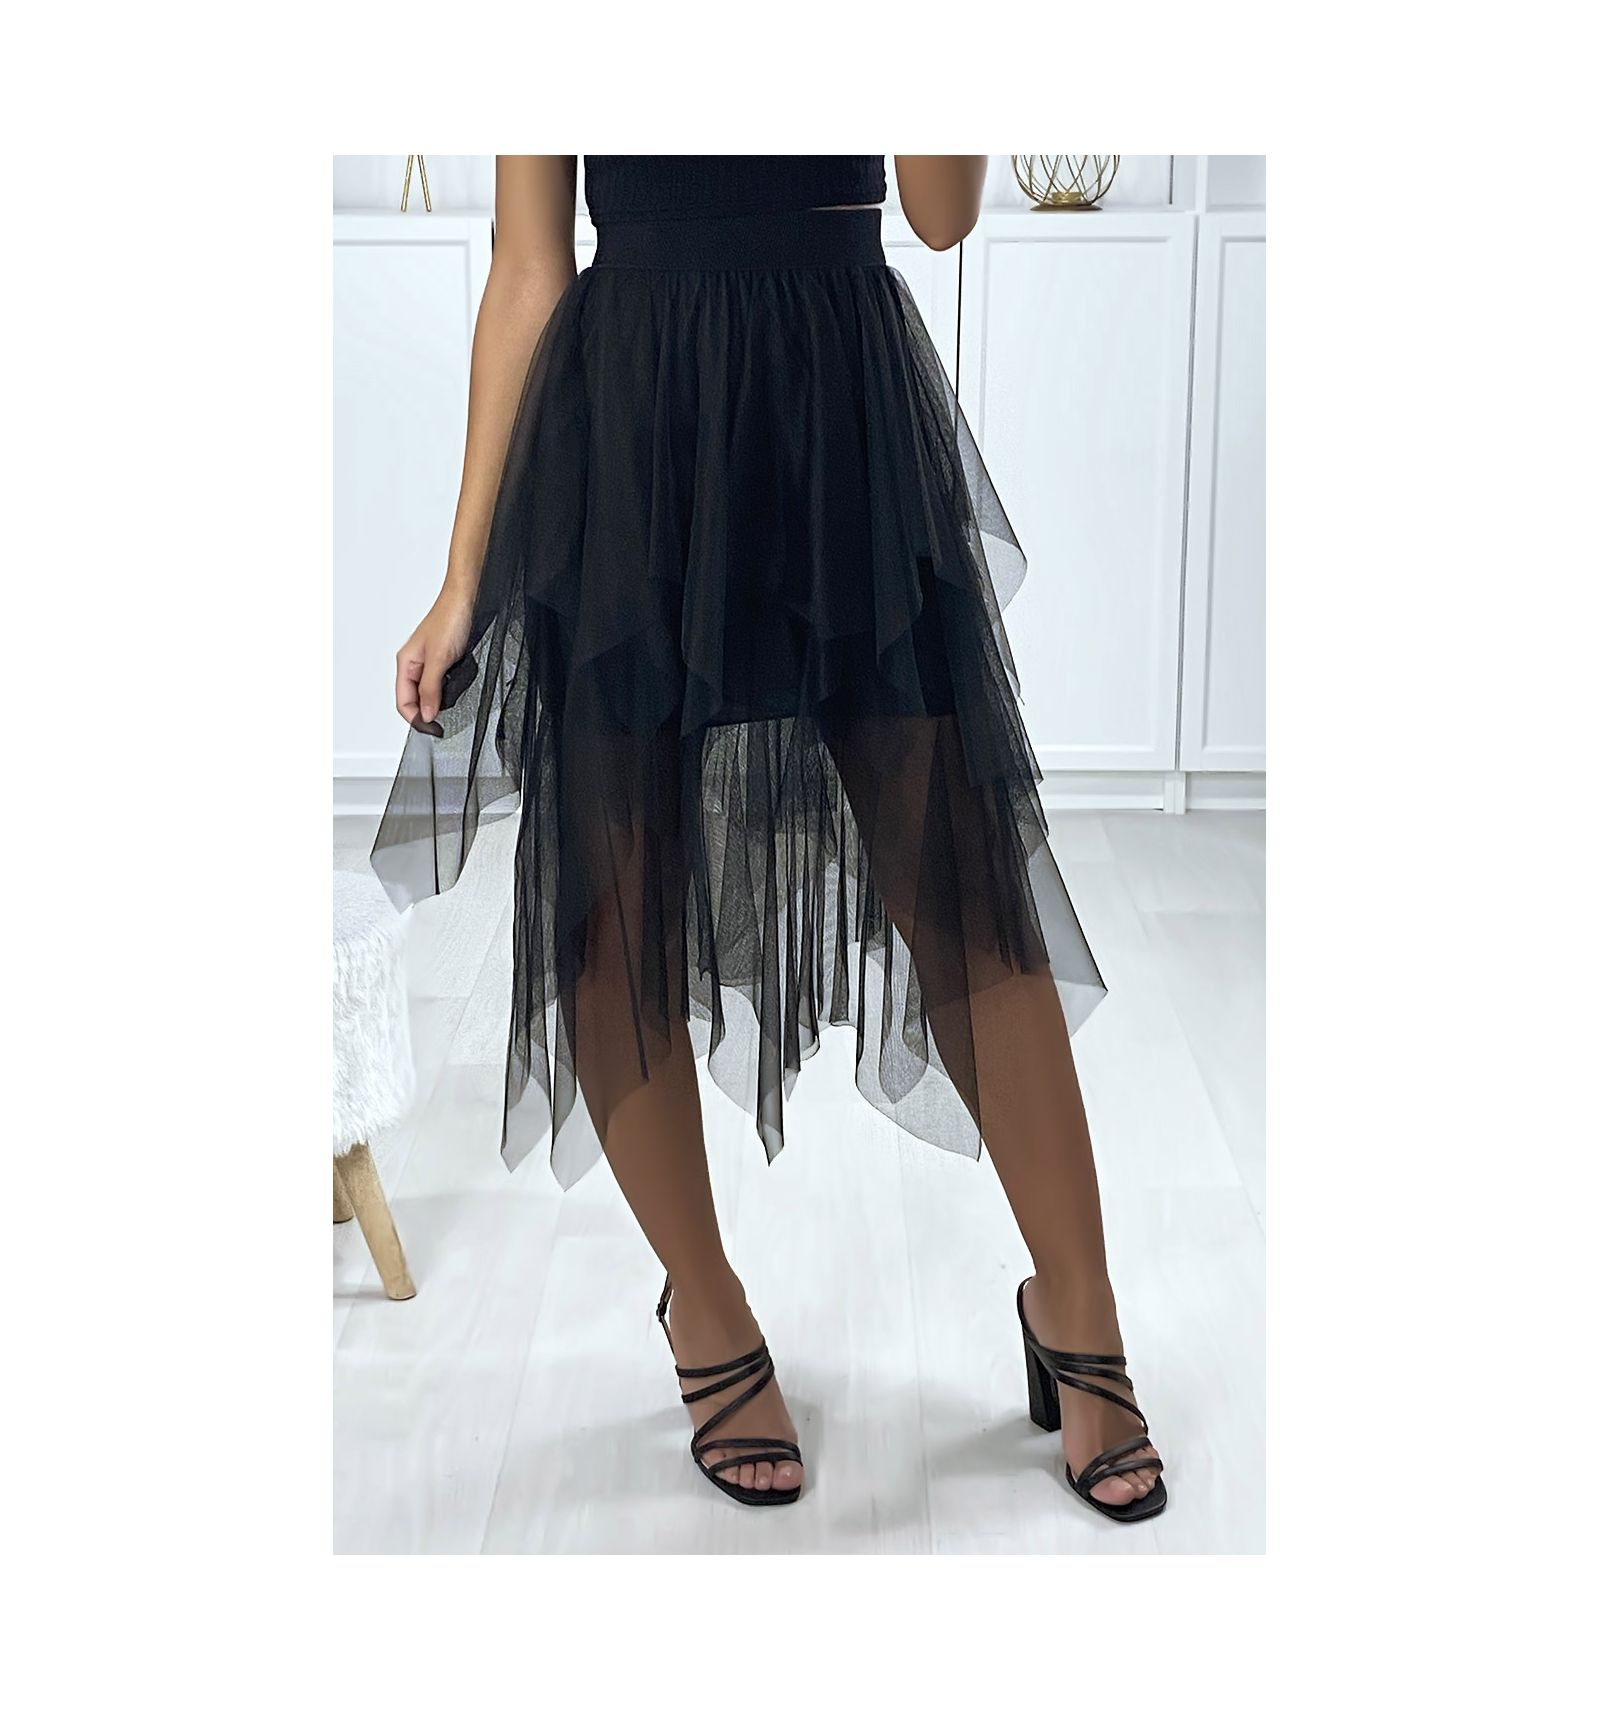 Fascinating voile valance Voile Valance Skirt Lined Inside Black Veil Flounce